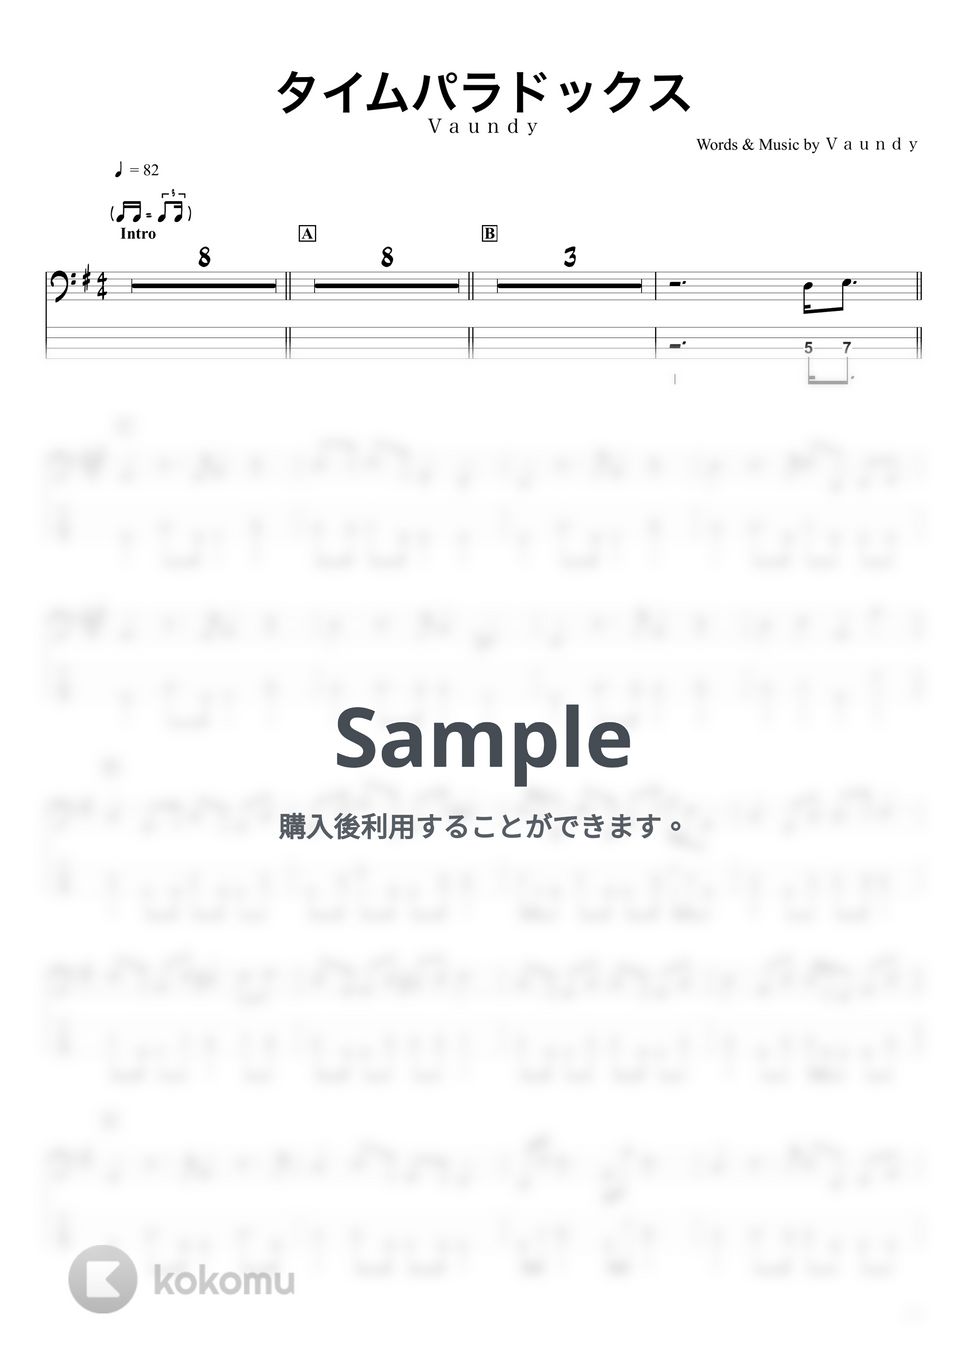 Vaundy - タイムパラドックス (ベースTAB譜☆4弦ベース対応) by swbass